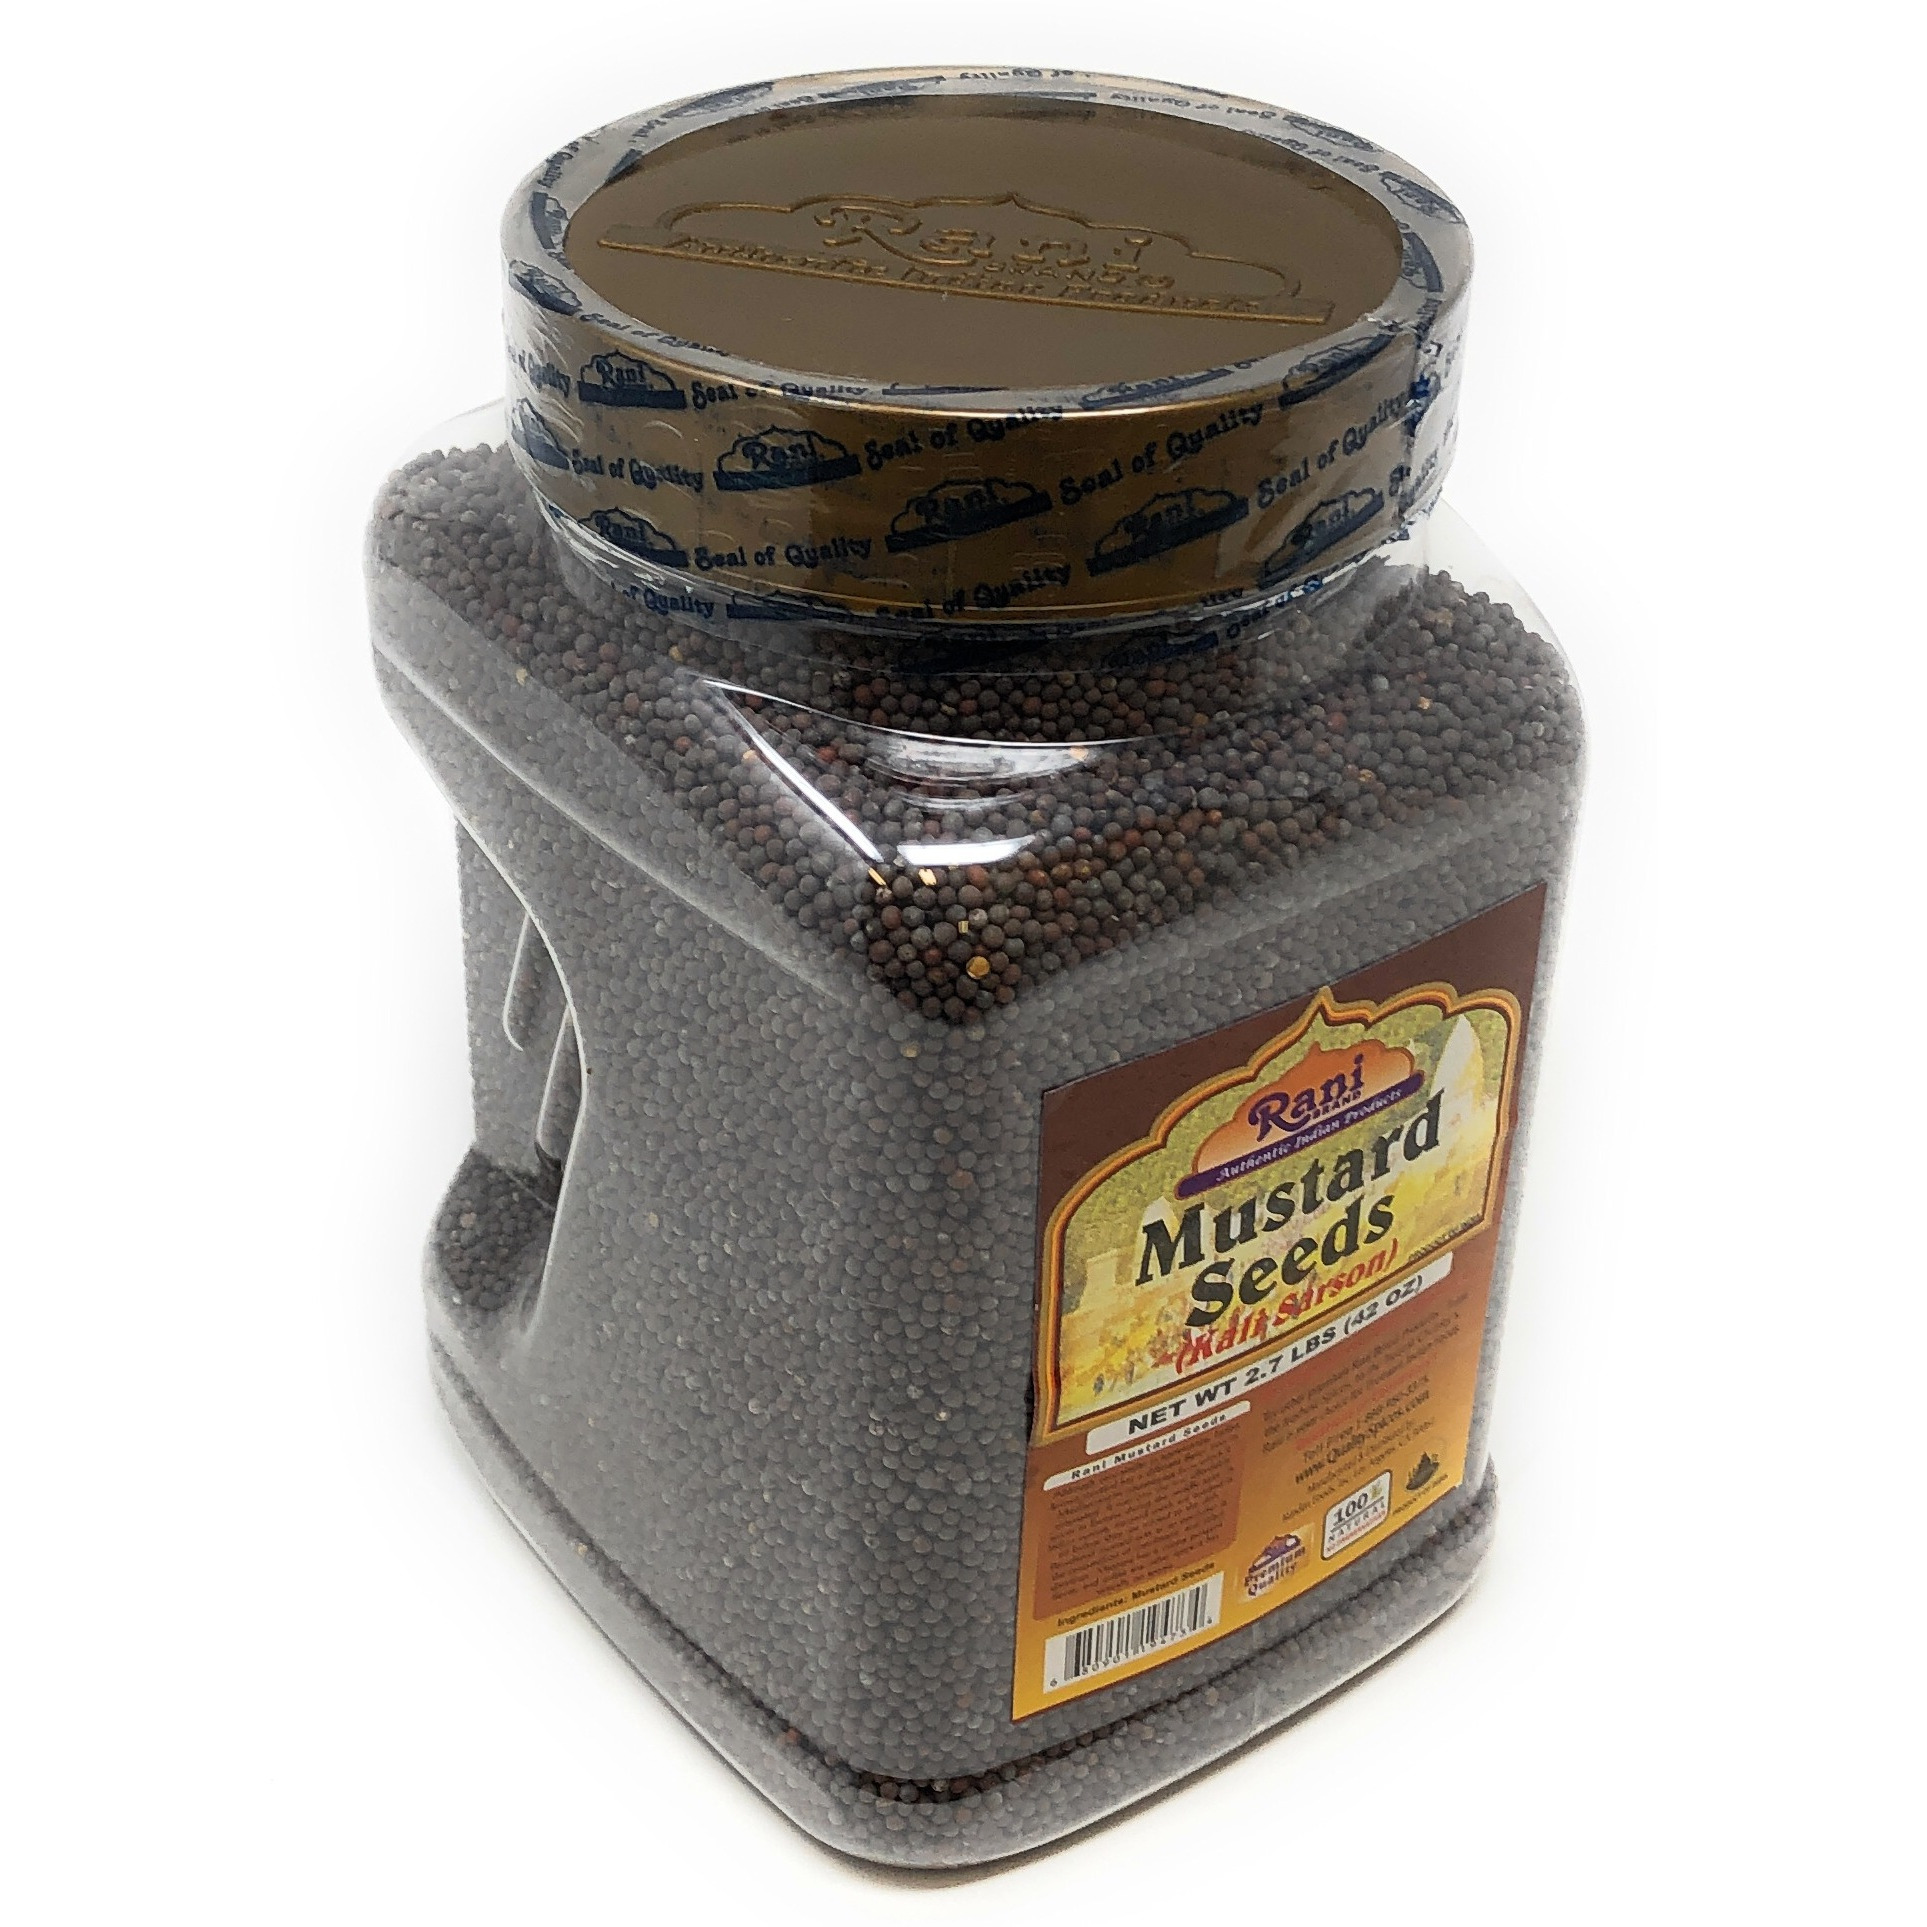 Rani Black Mustard Seeds Whole Spice (Kali Rai) 42oz (2.7 lbs) PET Jar All Natural ~ Gluten Friendly | NON-GMO | Vegan | Indian Origin